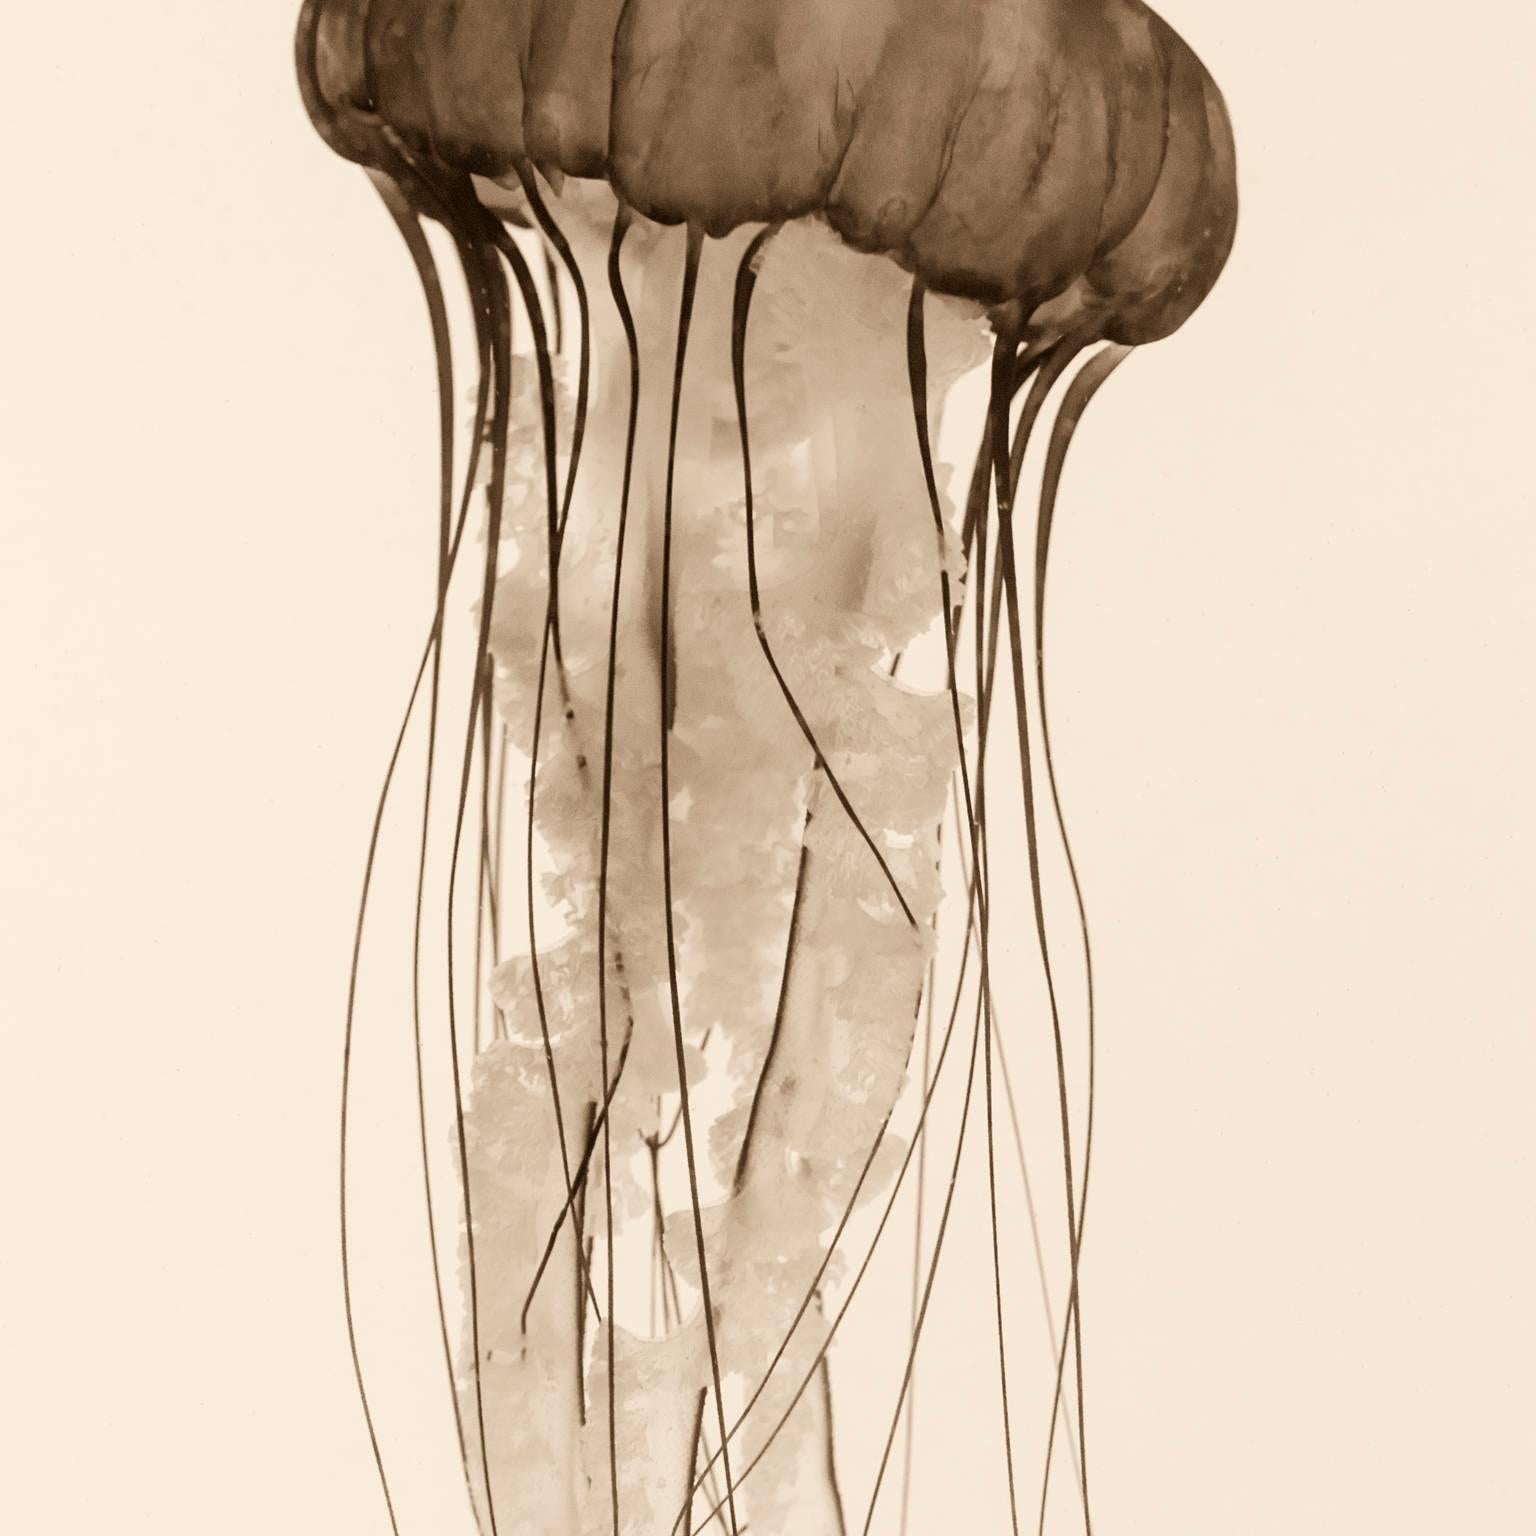 Pacific Sea Nettle - White Abstract Photograph by Massimo Di Lorenzo